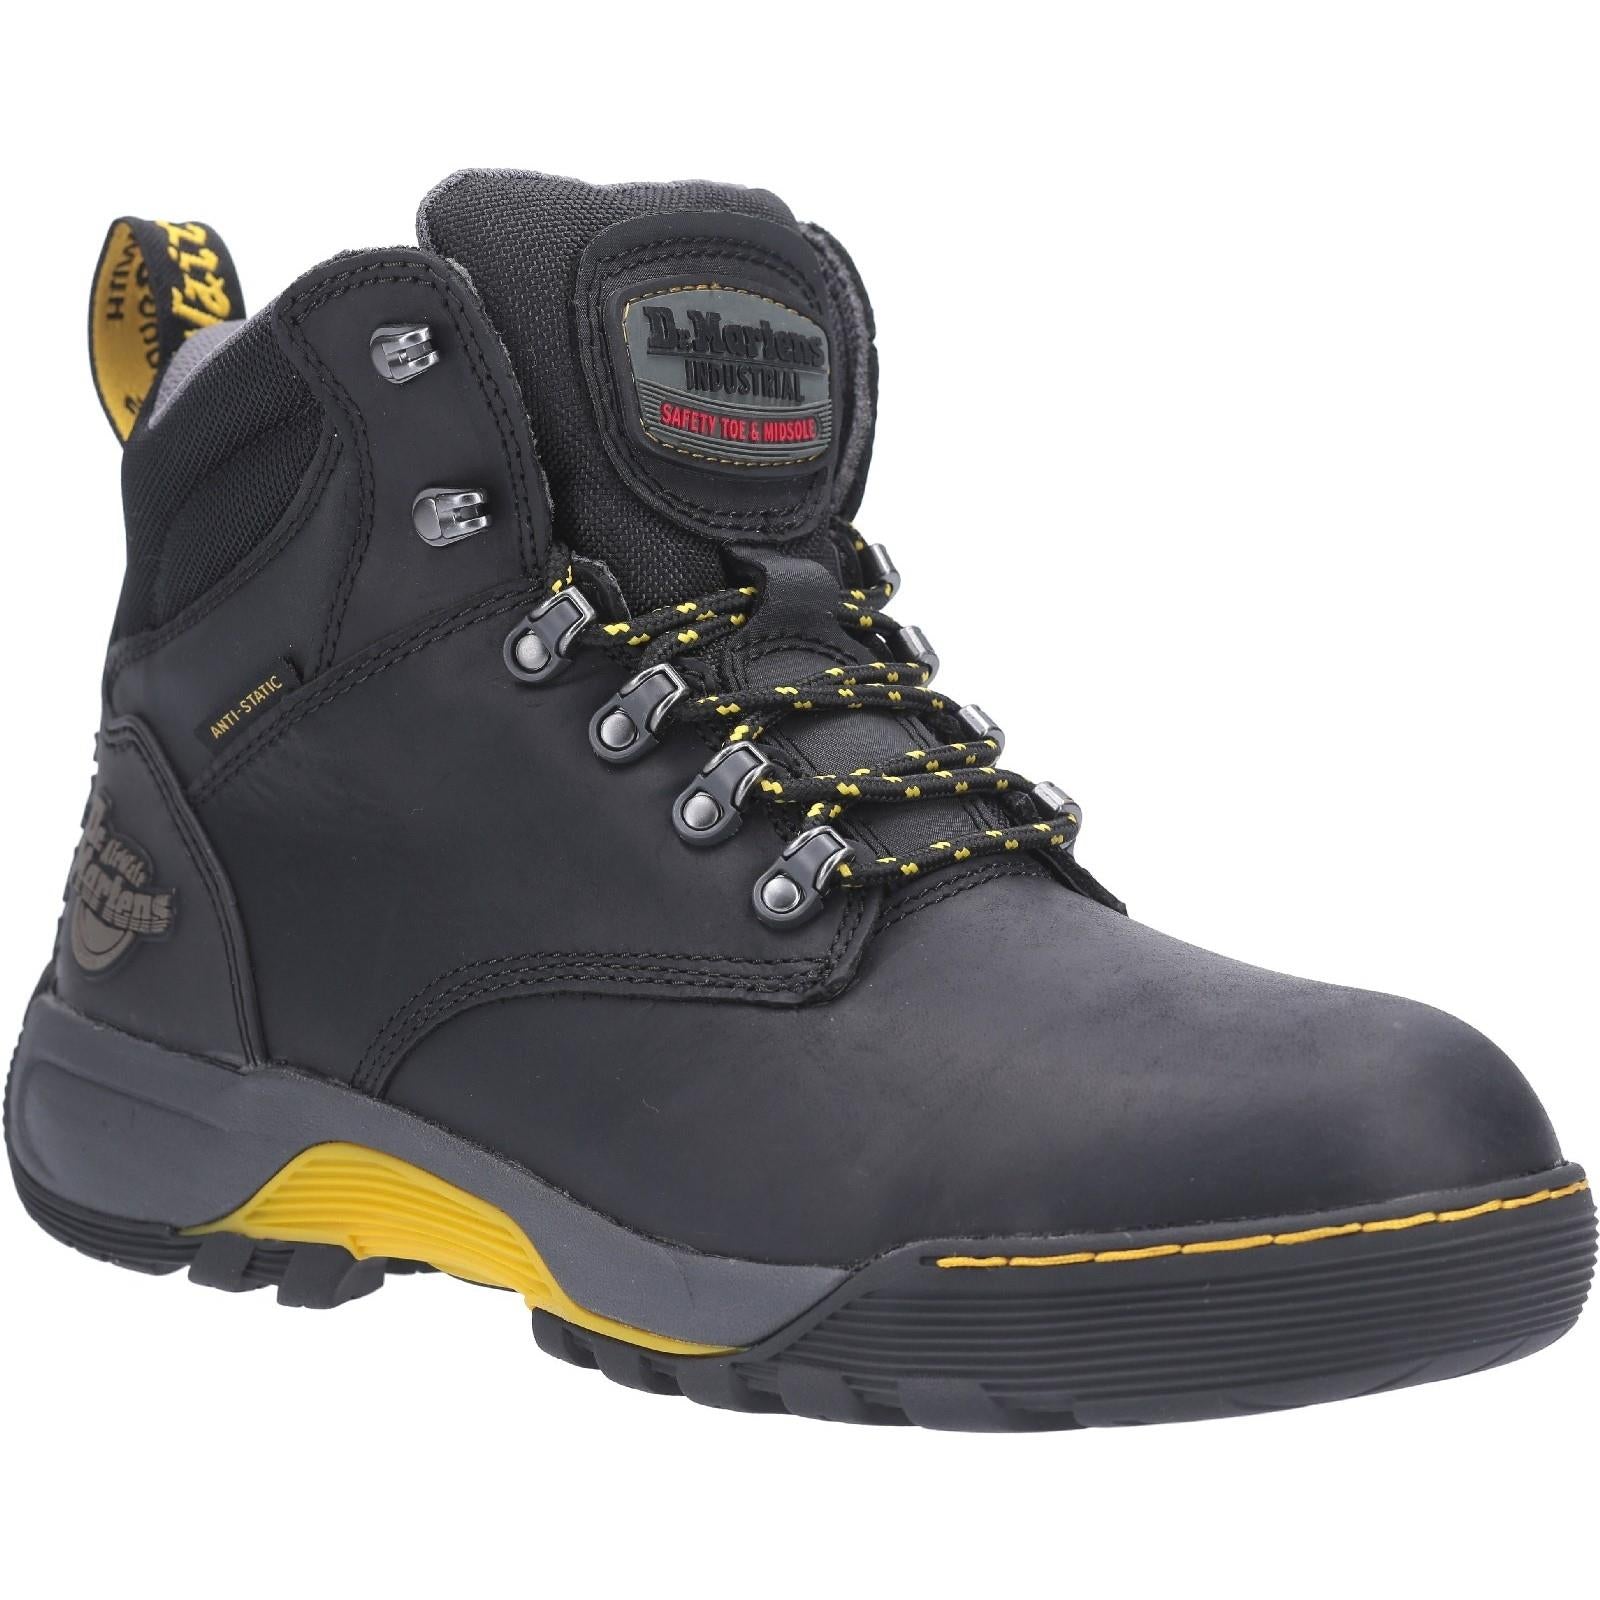 Dr Martens Ridge S3 black leather steel toe/midsole work safety hiker boots